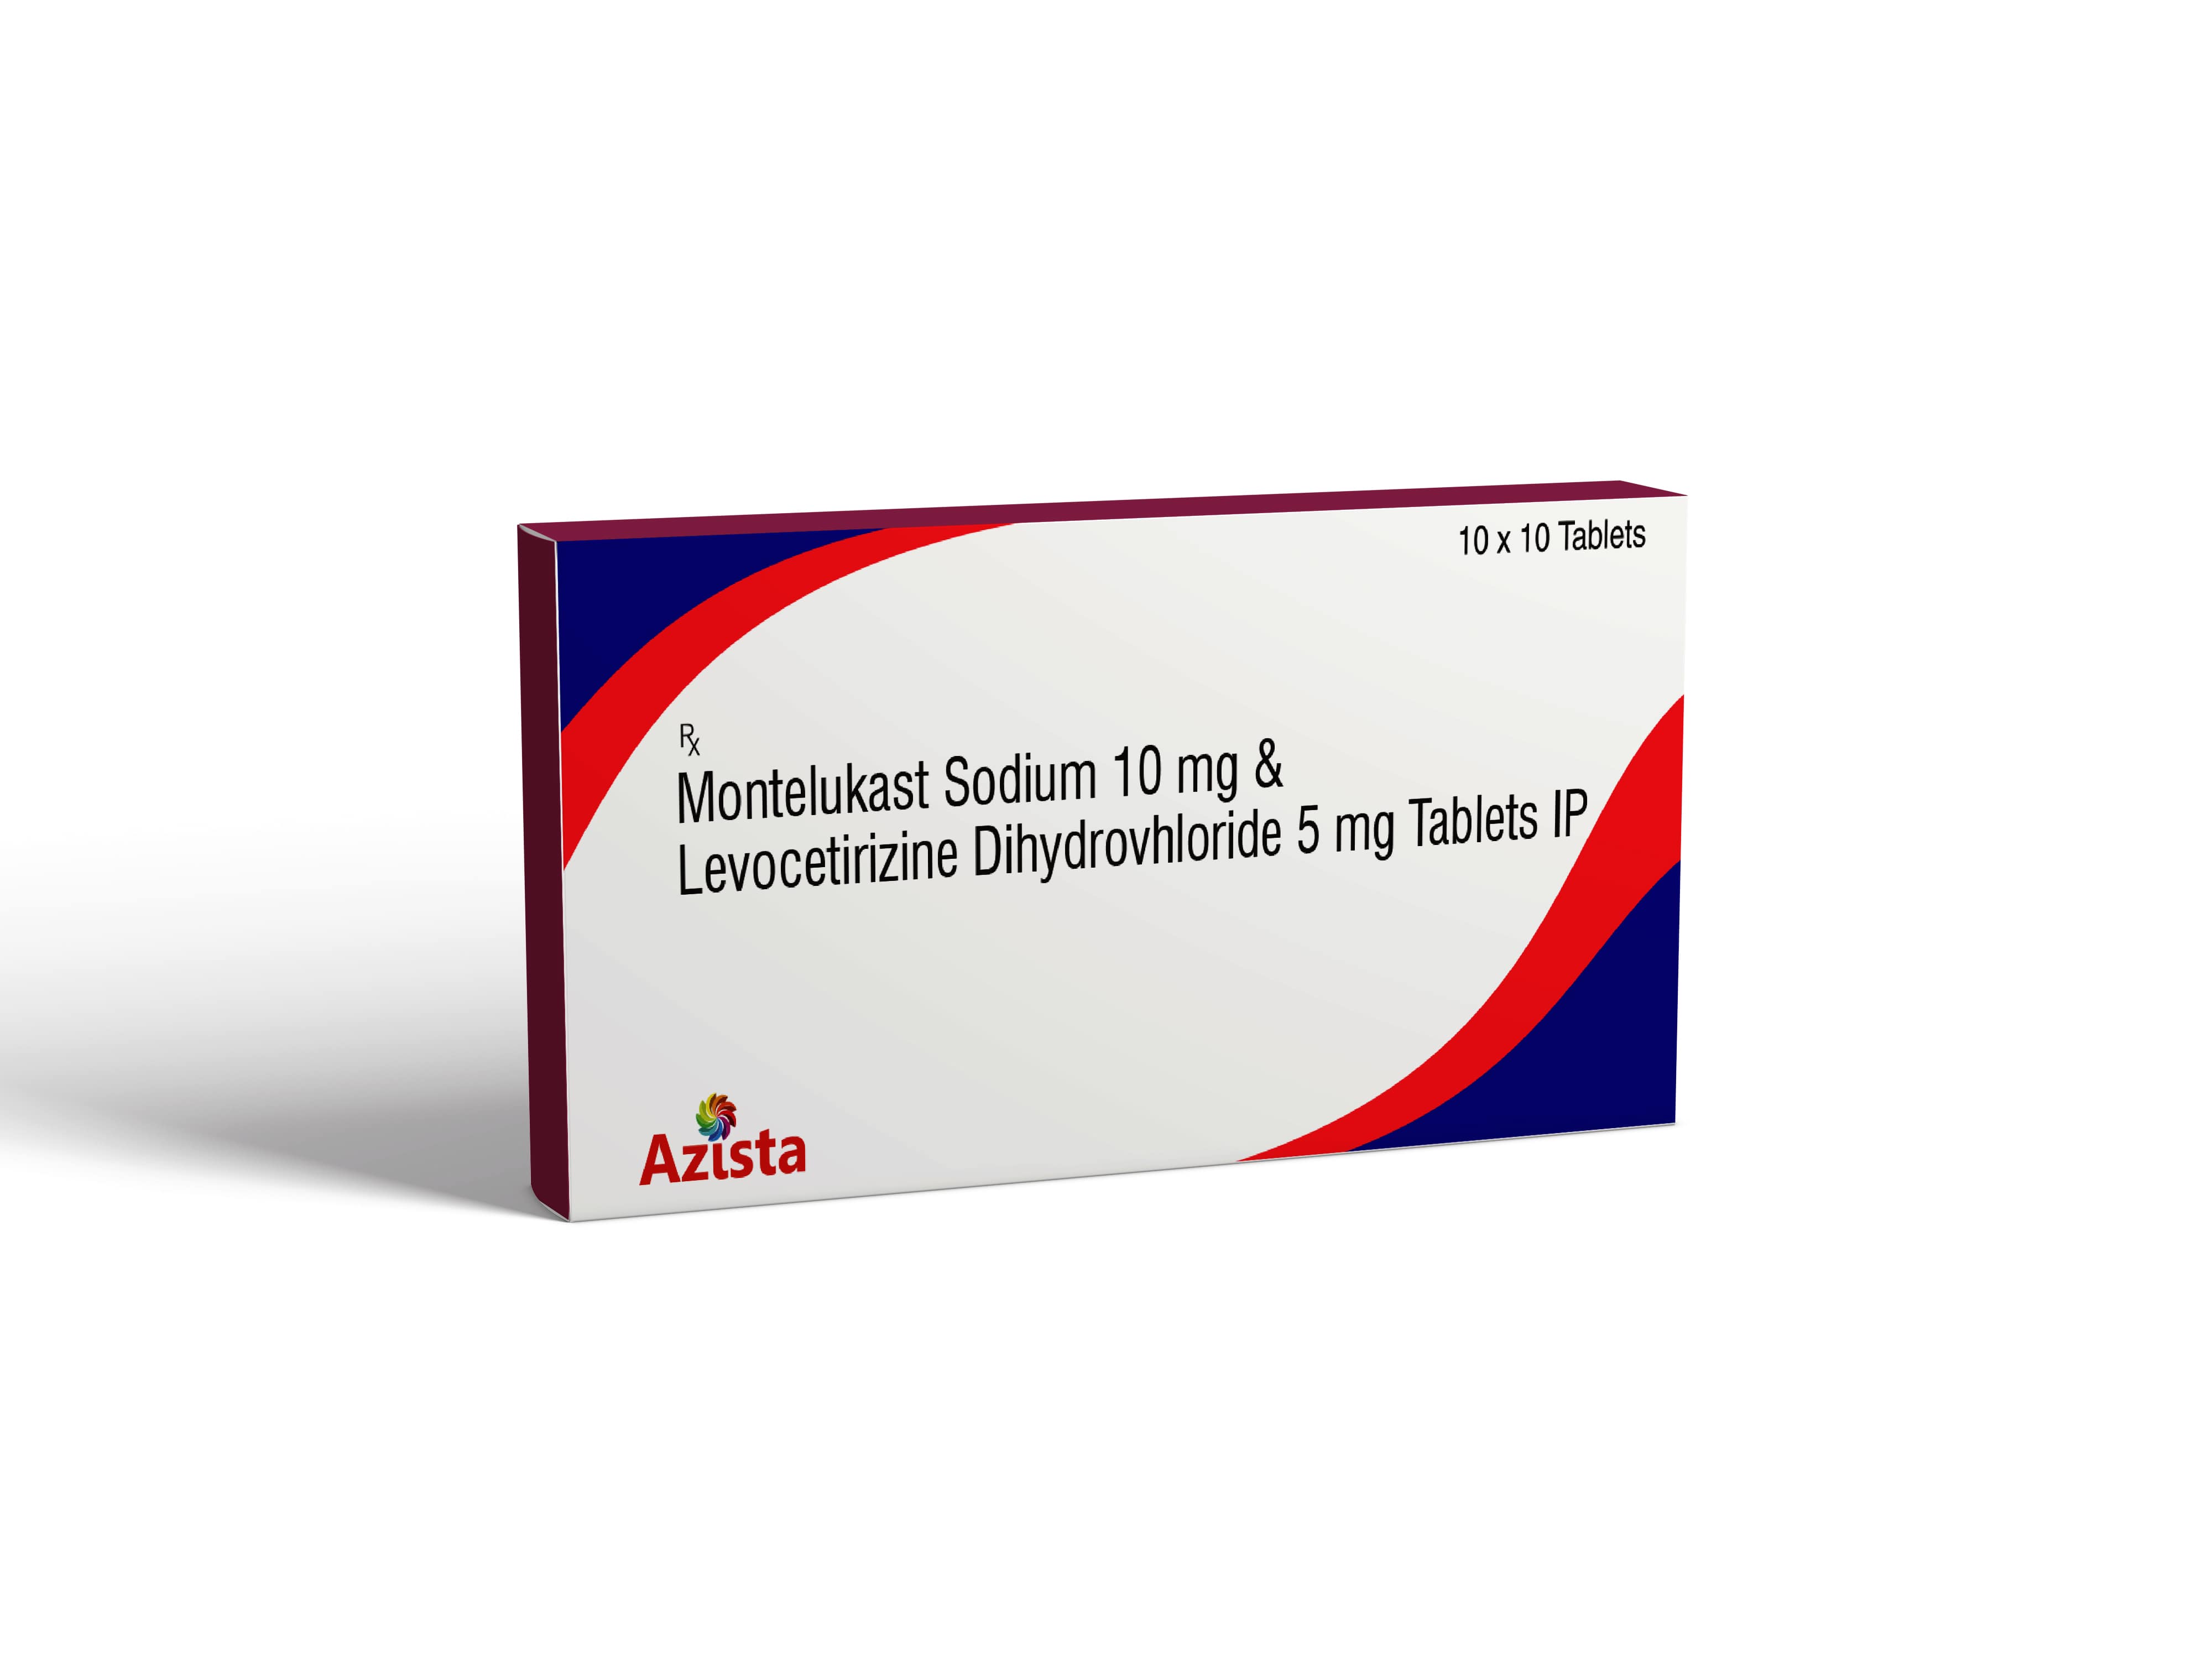 Montelukast sodium 10 mg and Levocetirizine Dihydrochloride 5 mg IP Tablets